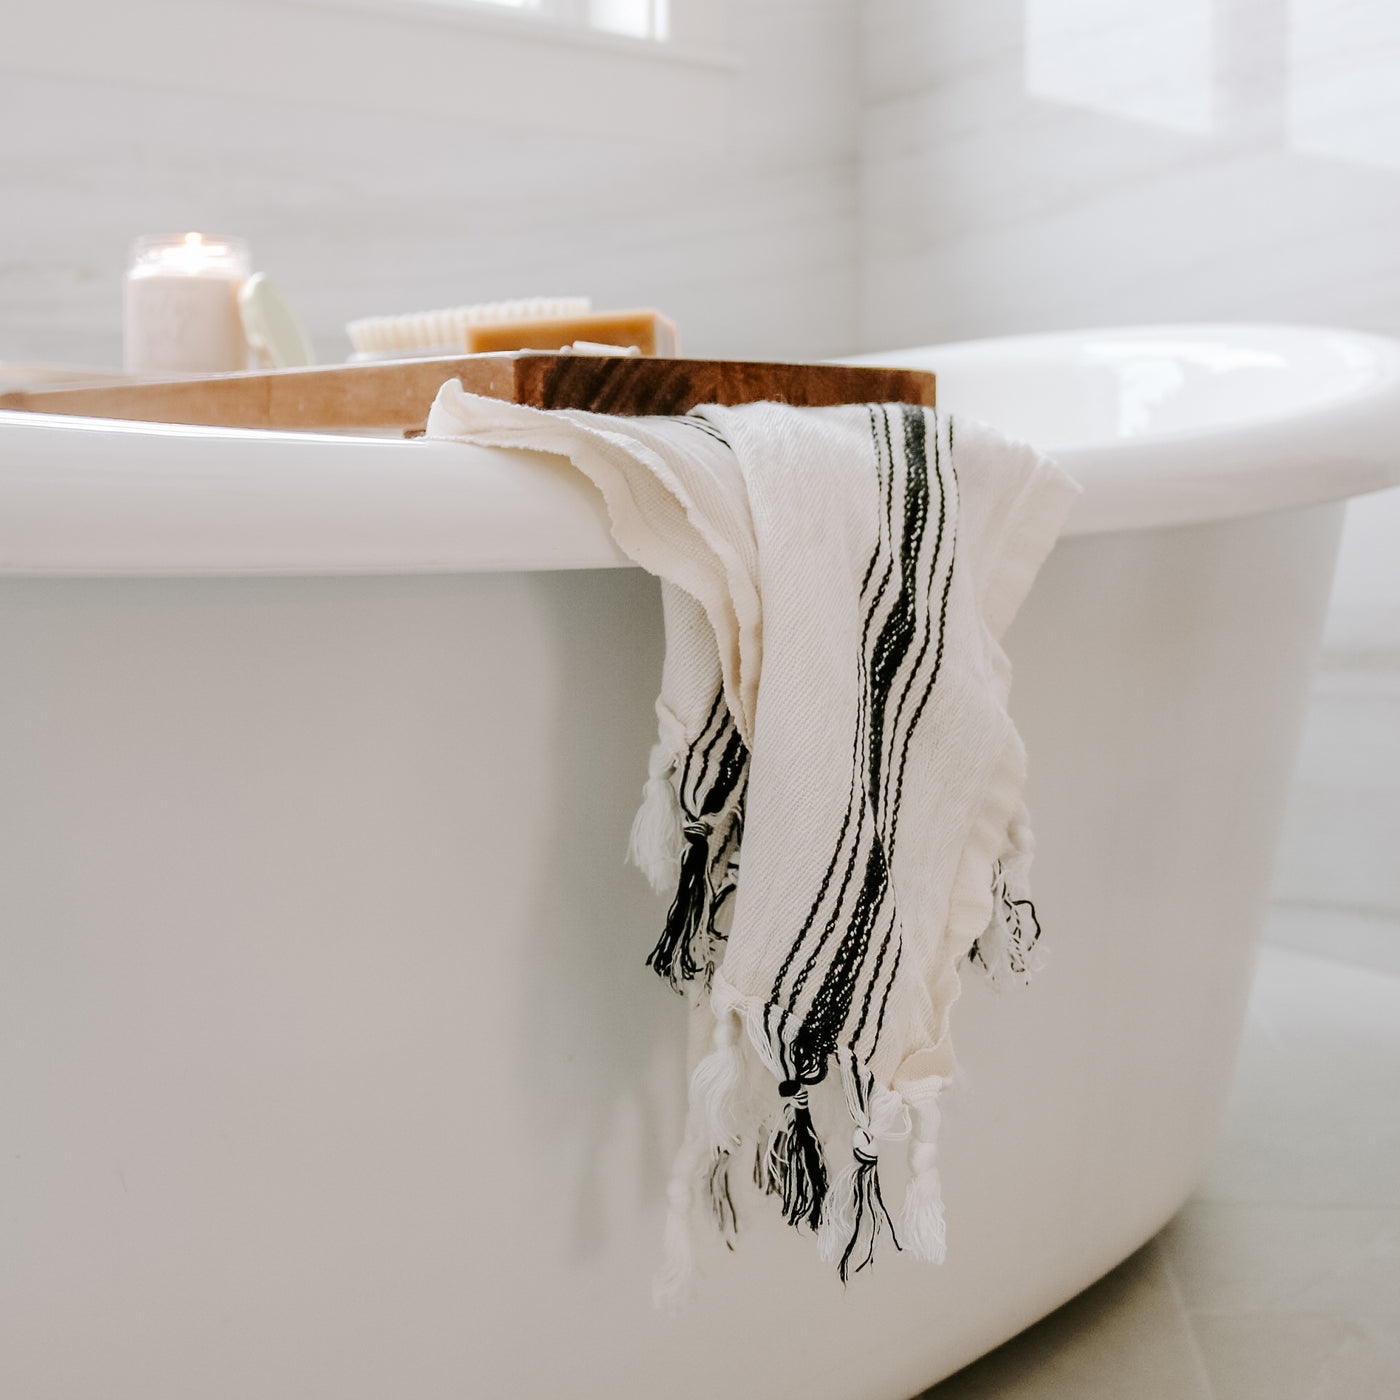 Savannah Turkish Cotton + Bamboo Hand Towel - Five Stripe - Sweet Water Decor - Hand Towels